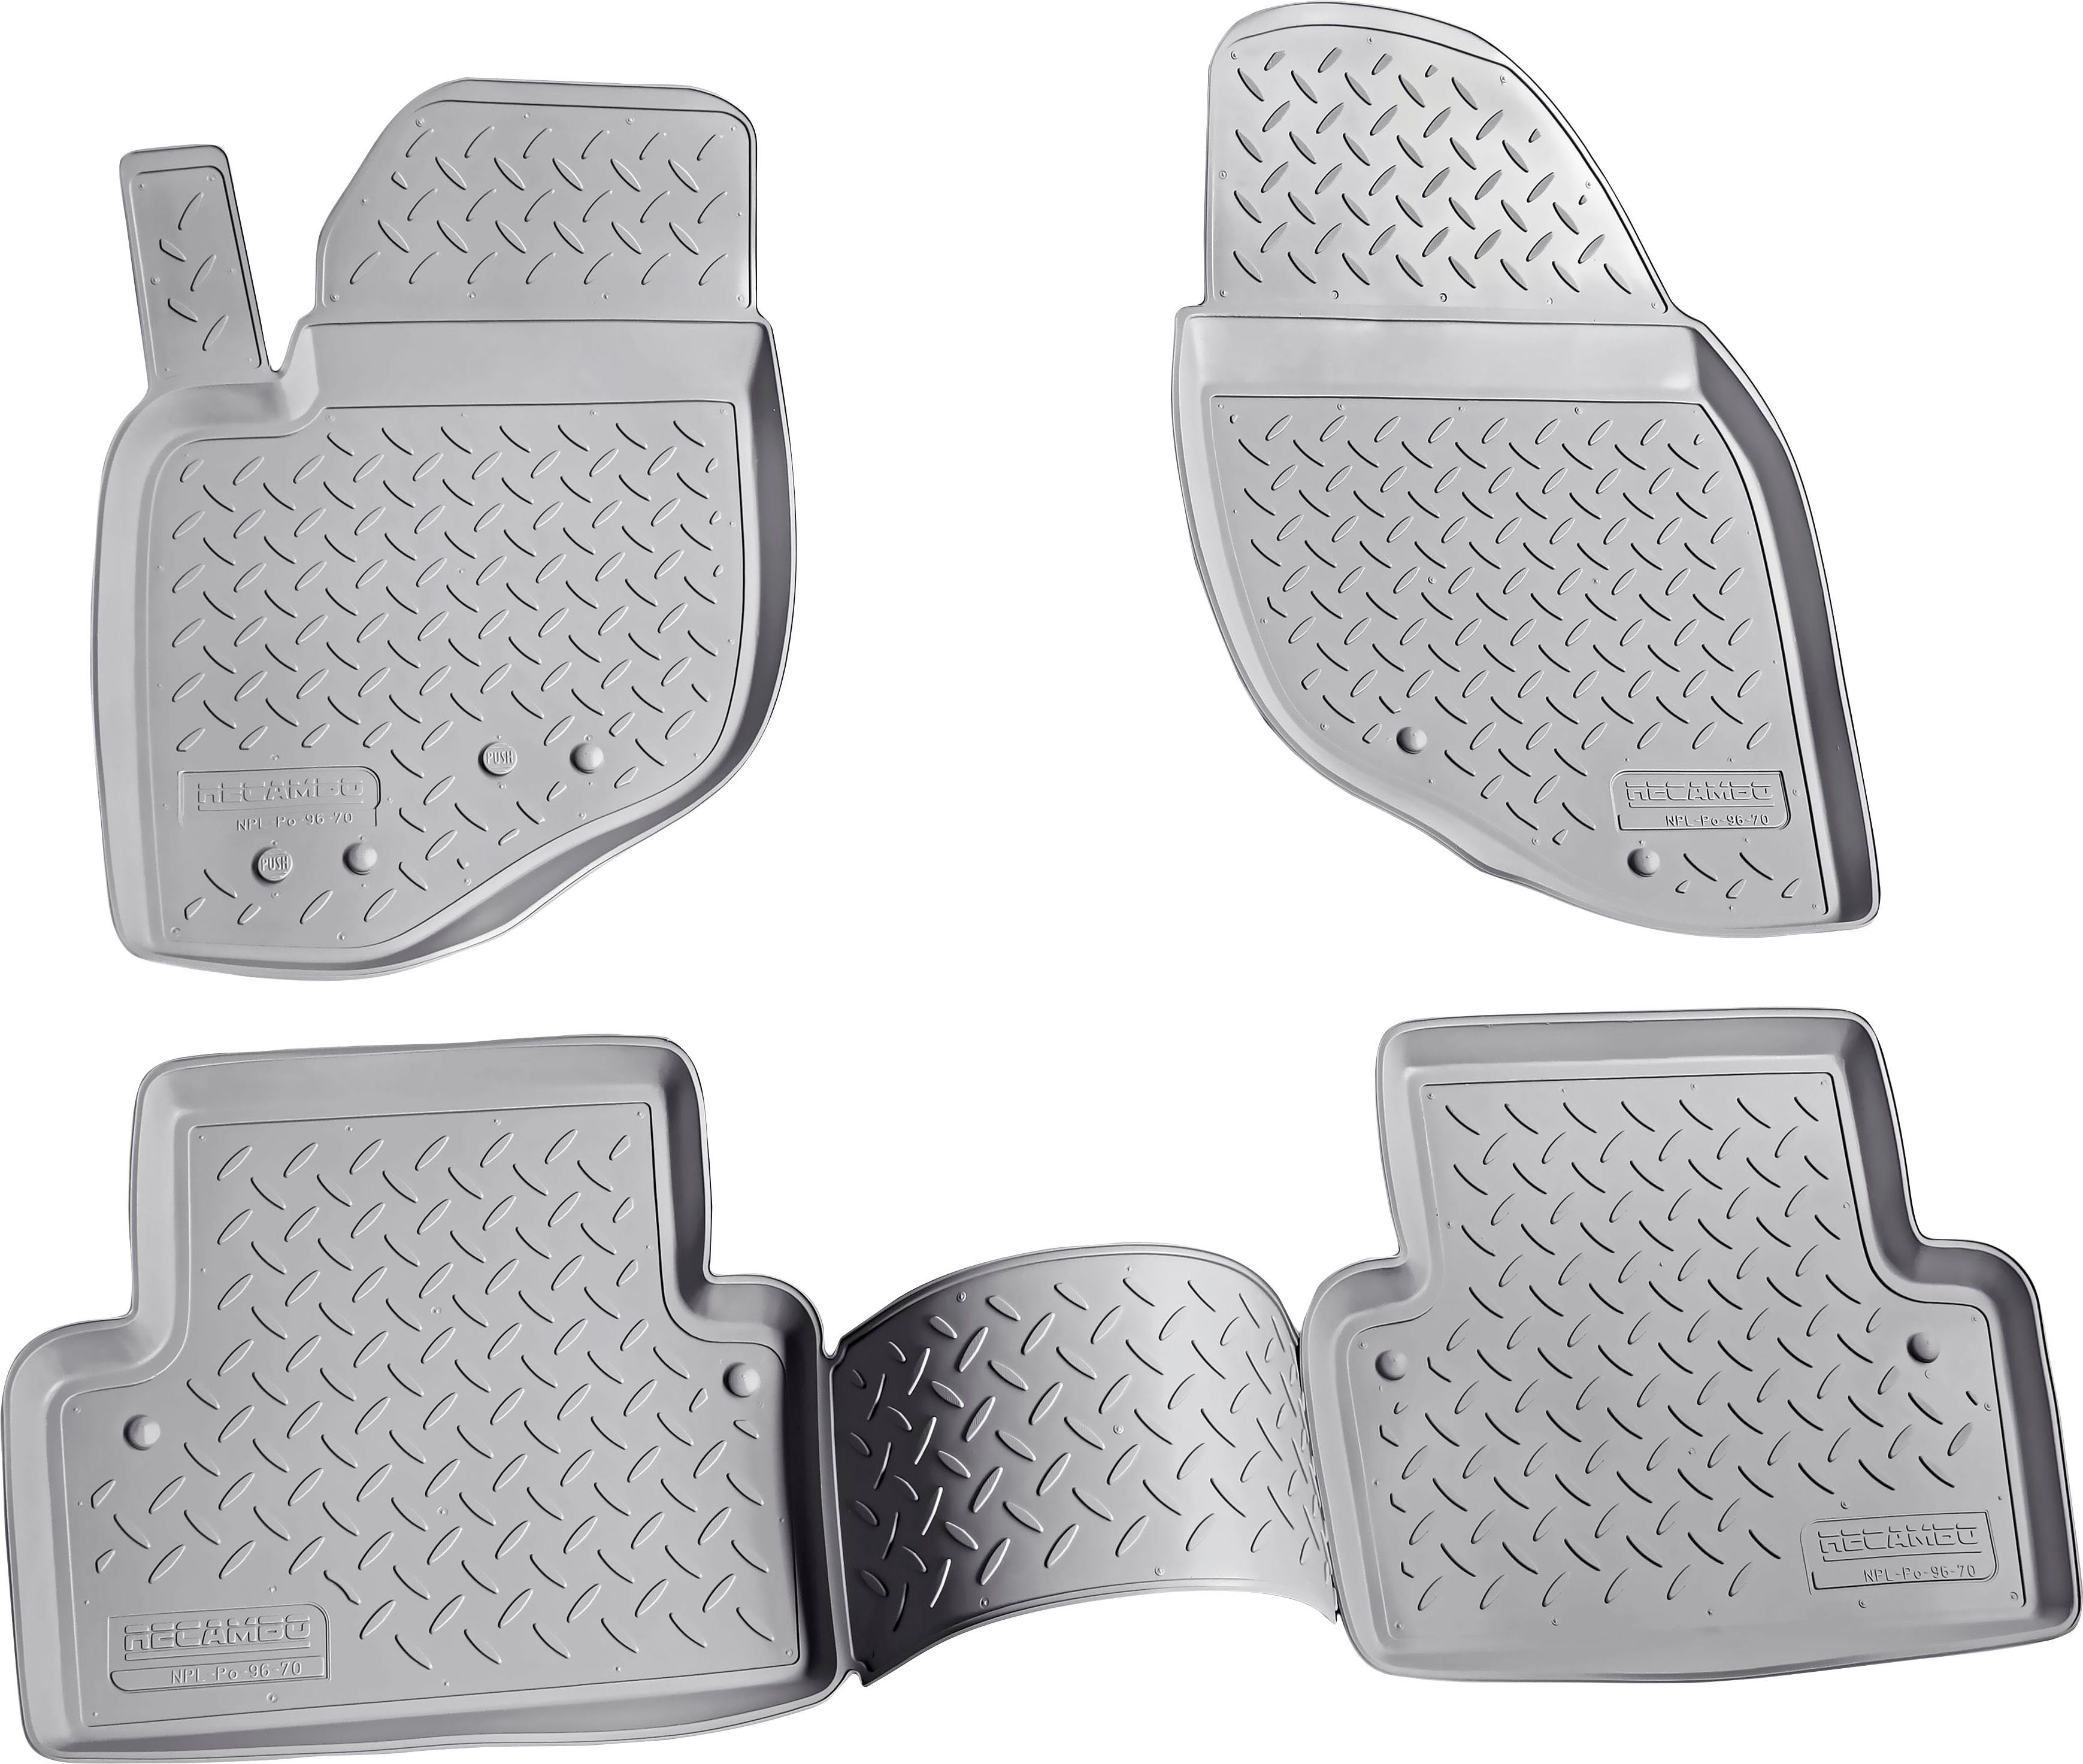 RECAMBO Passform-Fußmatten CustomComforts (4 St), für Volvo V70, XC70 2000 - 2007, perfekte Passform